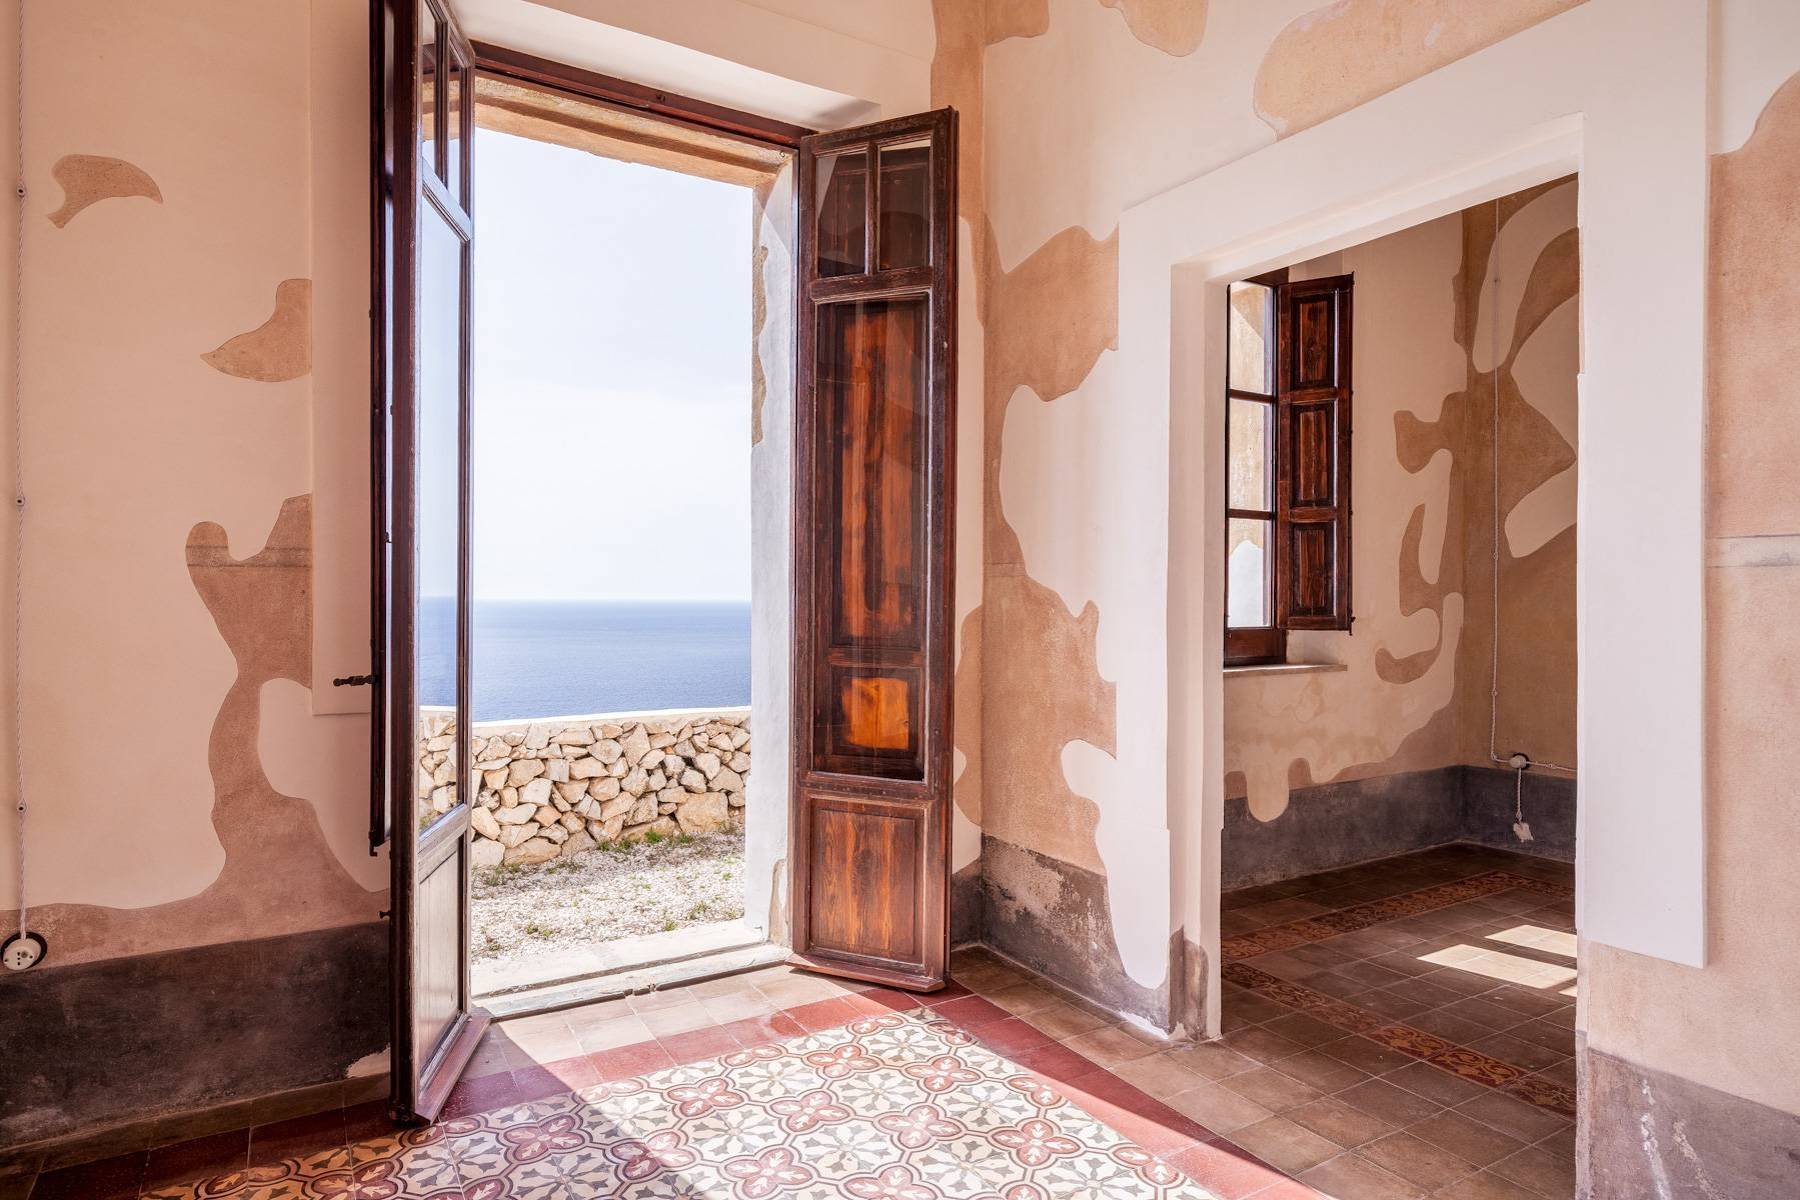 Francis York One-of-a-Kind Italian Estate in the Egadi Islands, Sicily Italy Sothebys 00017.jpg